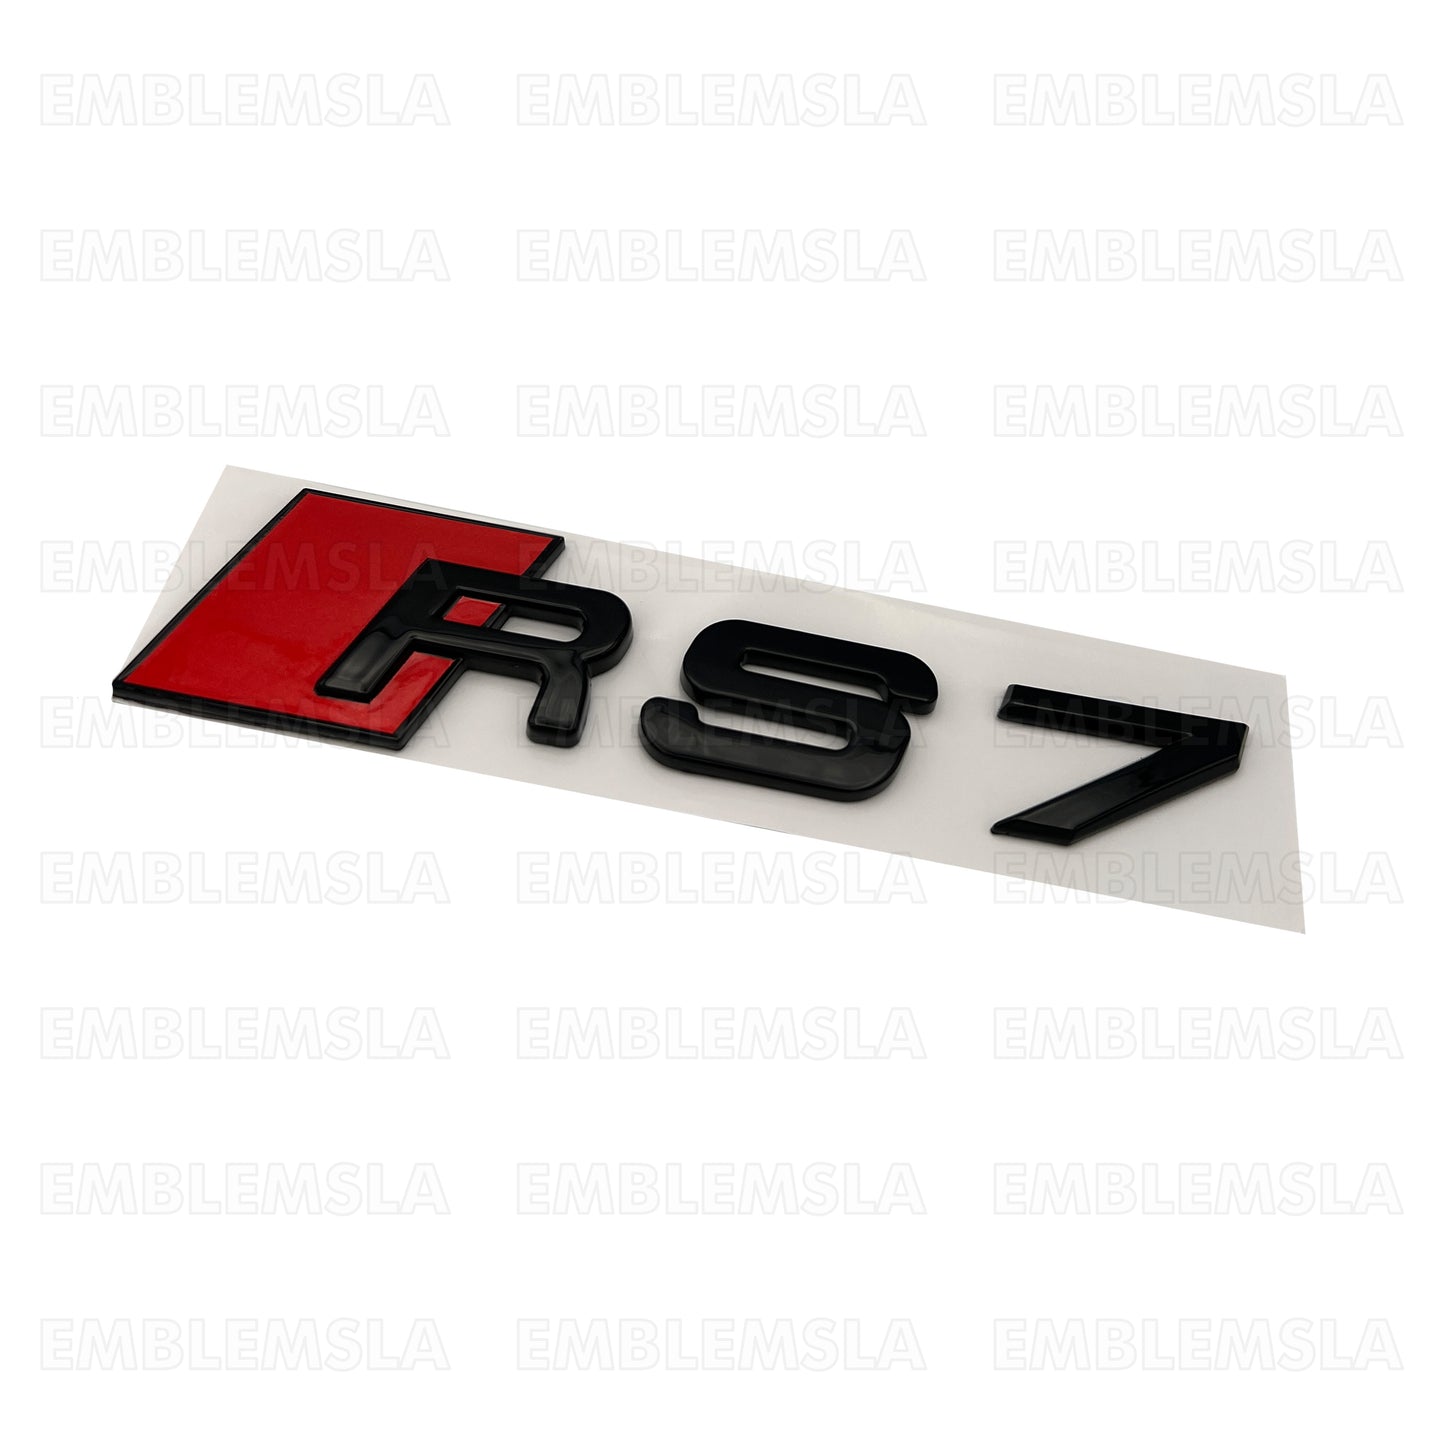 Audi RS7 Gloss Black Emblem 3D Badge Rear Trunk Tailgate fit Audi RS7 A7 S7 Logo